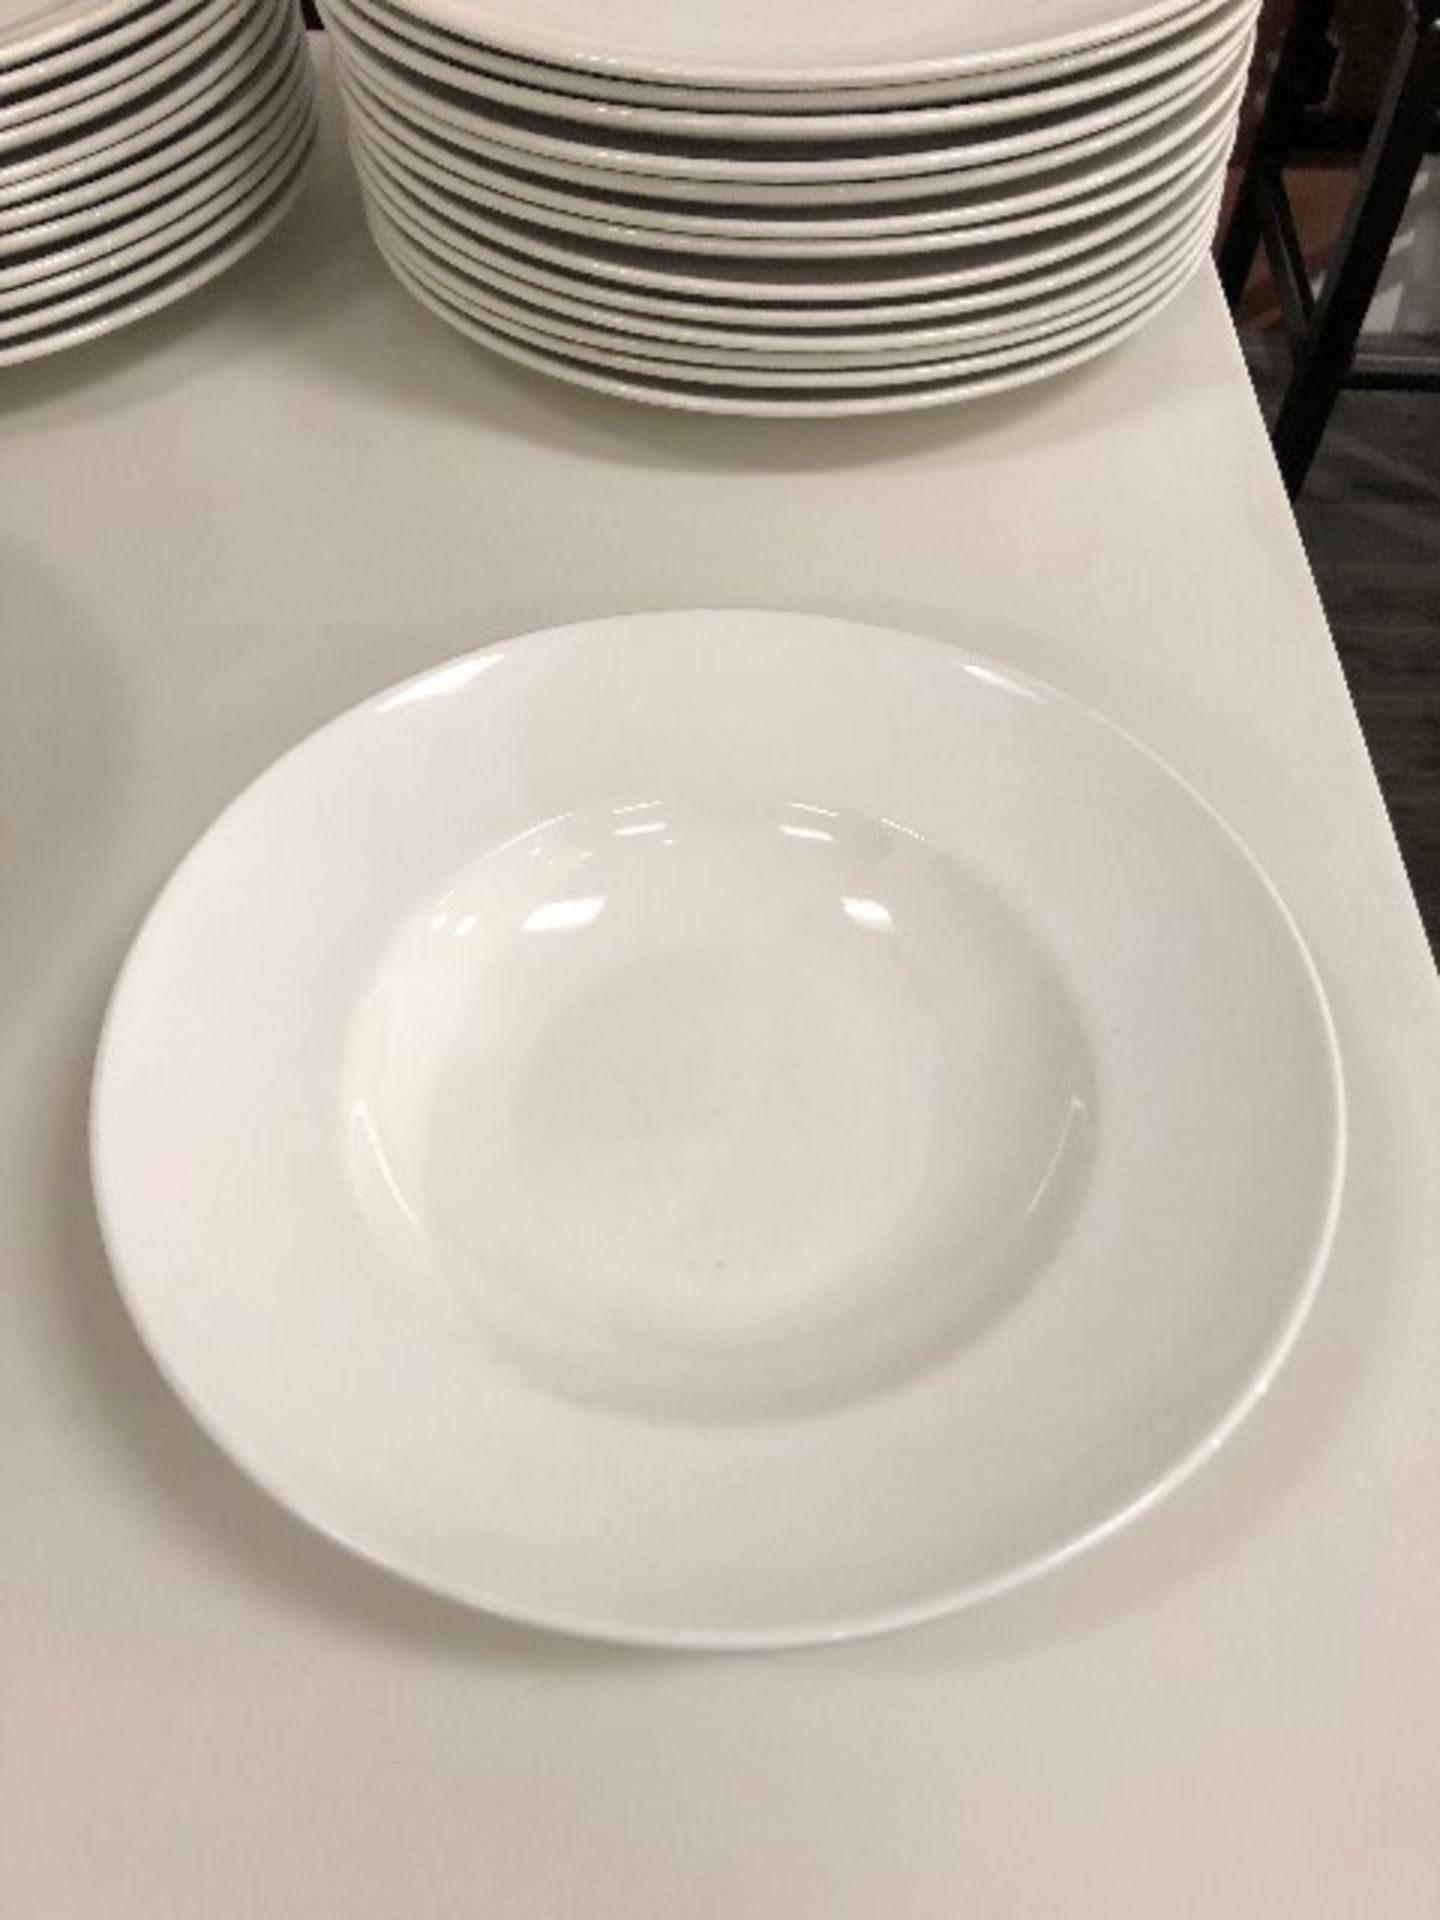 Round bowl plates, white, 10”, 33 pcs (Lot) - Image 2 of 2